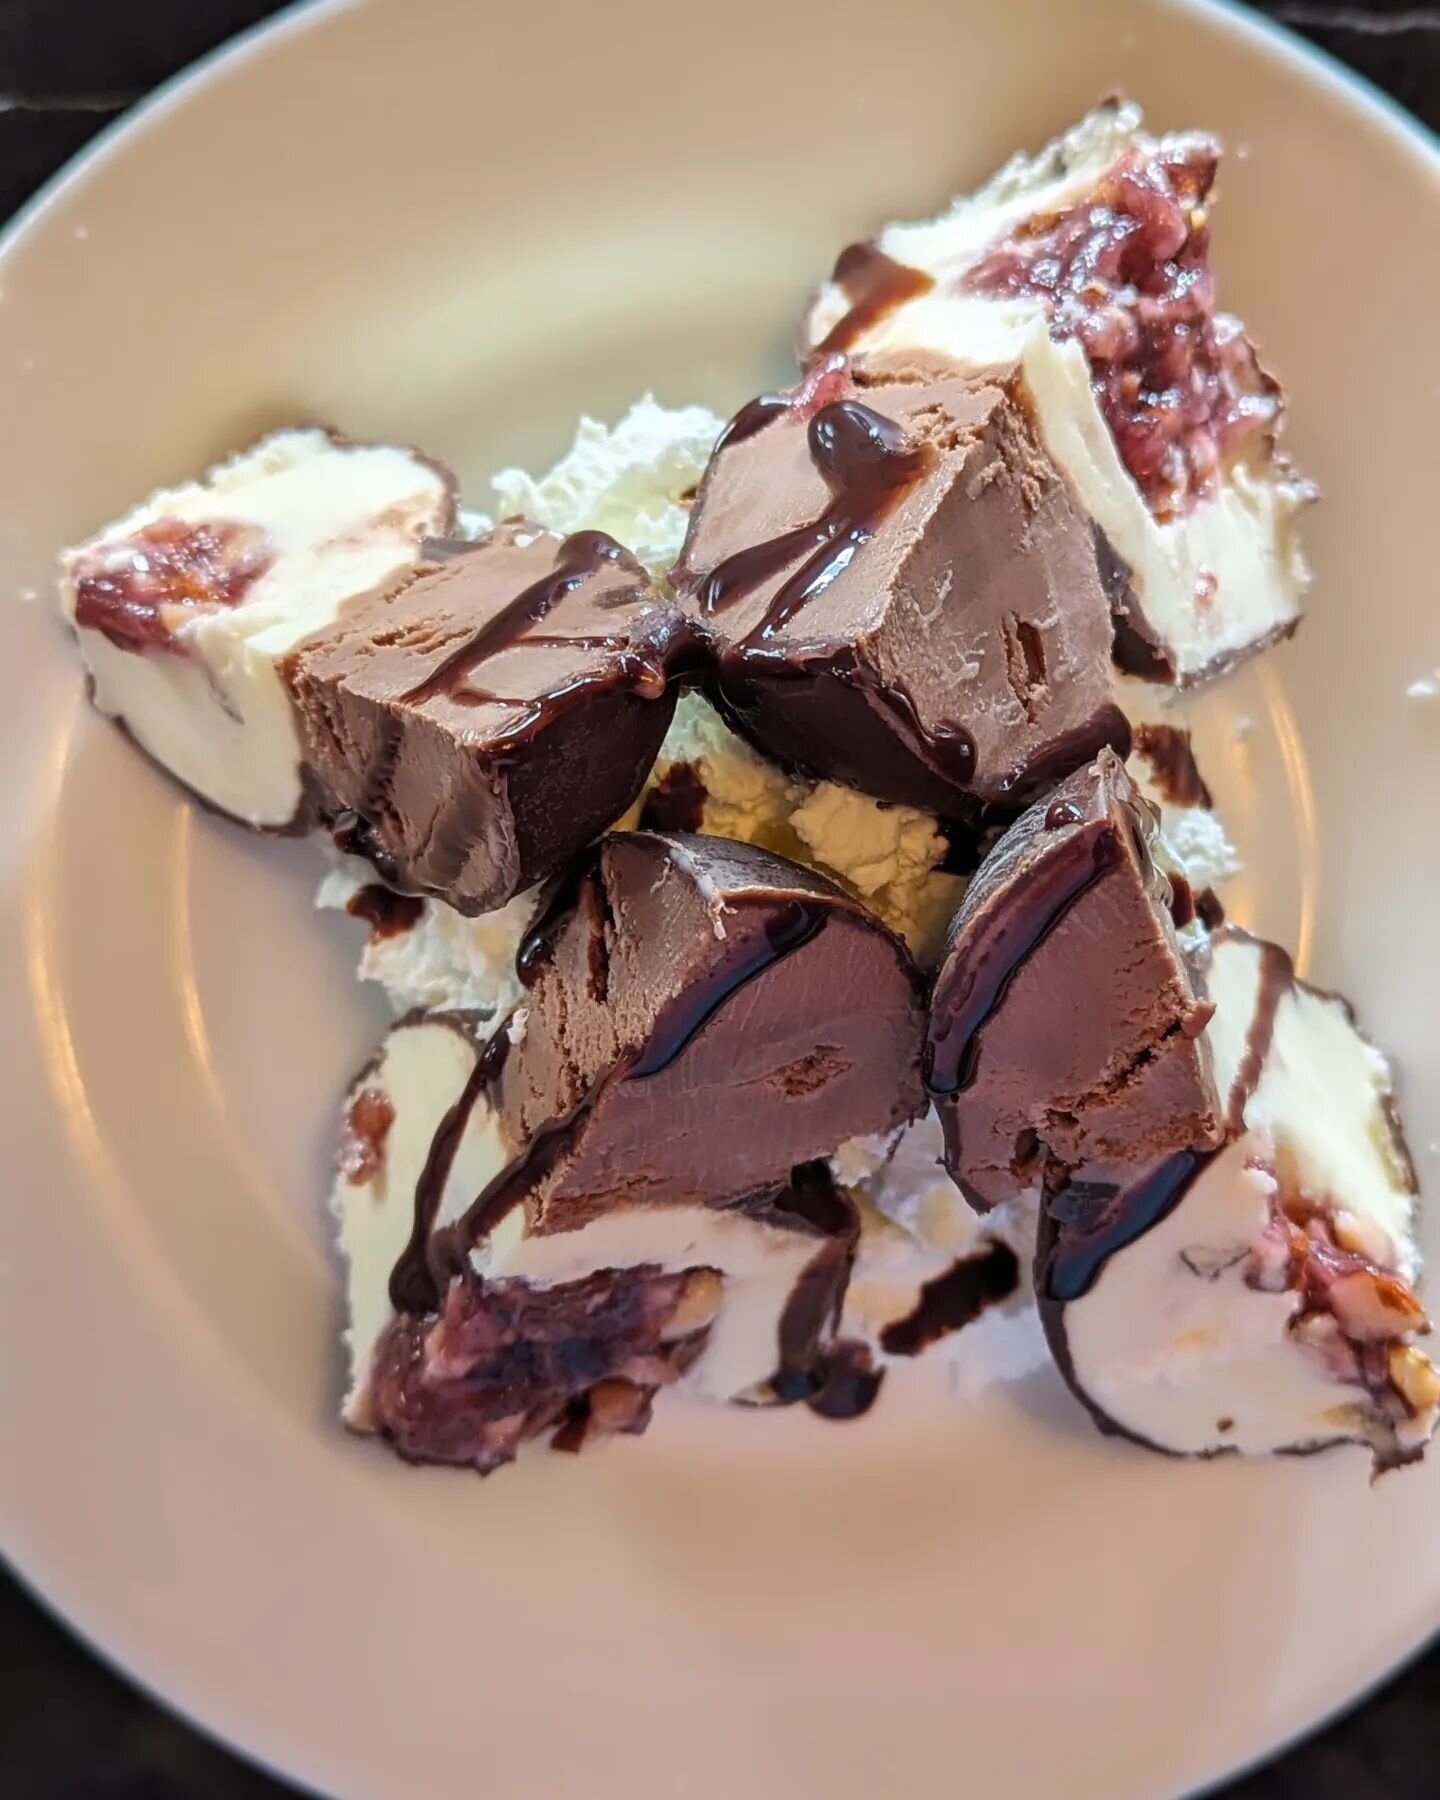 There's always room for dessert! 🍨 Classic Tartufo with vanilla &amp; chocolate gelato with raspberry &amp; walnut filling. 

 (914) 835-6199 for take-out &amp; reservations.
📍Harrison, NY

#trattoriavivolo #cucinaitaliana #vivolo #harrison #tartuf